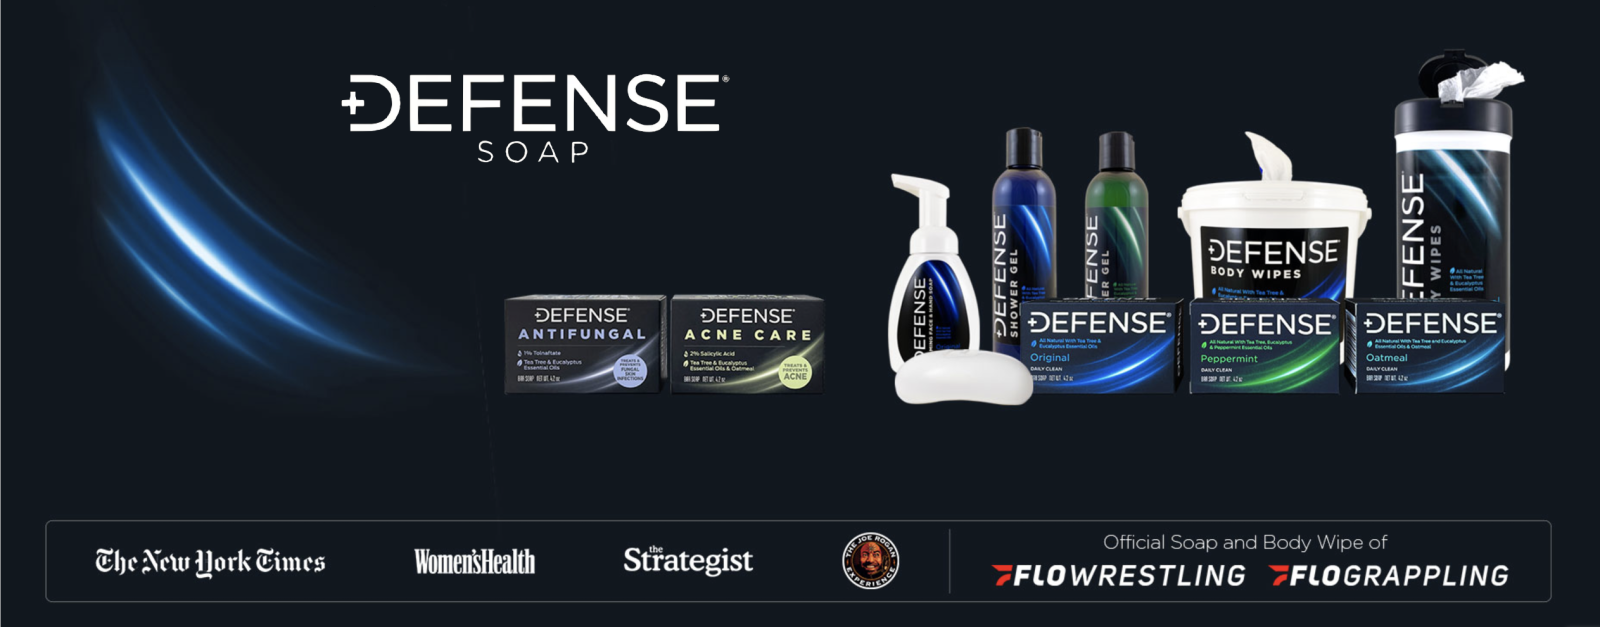 Defense Soap Australia